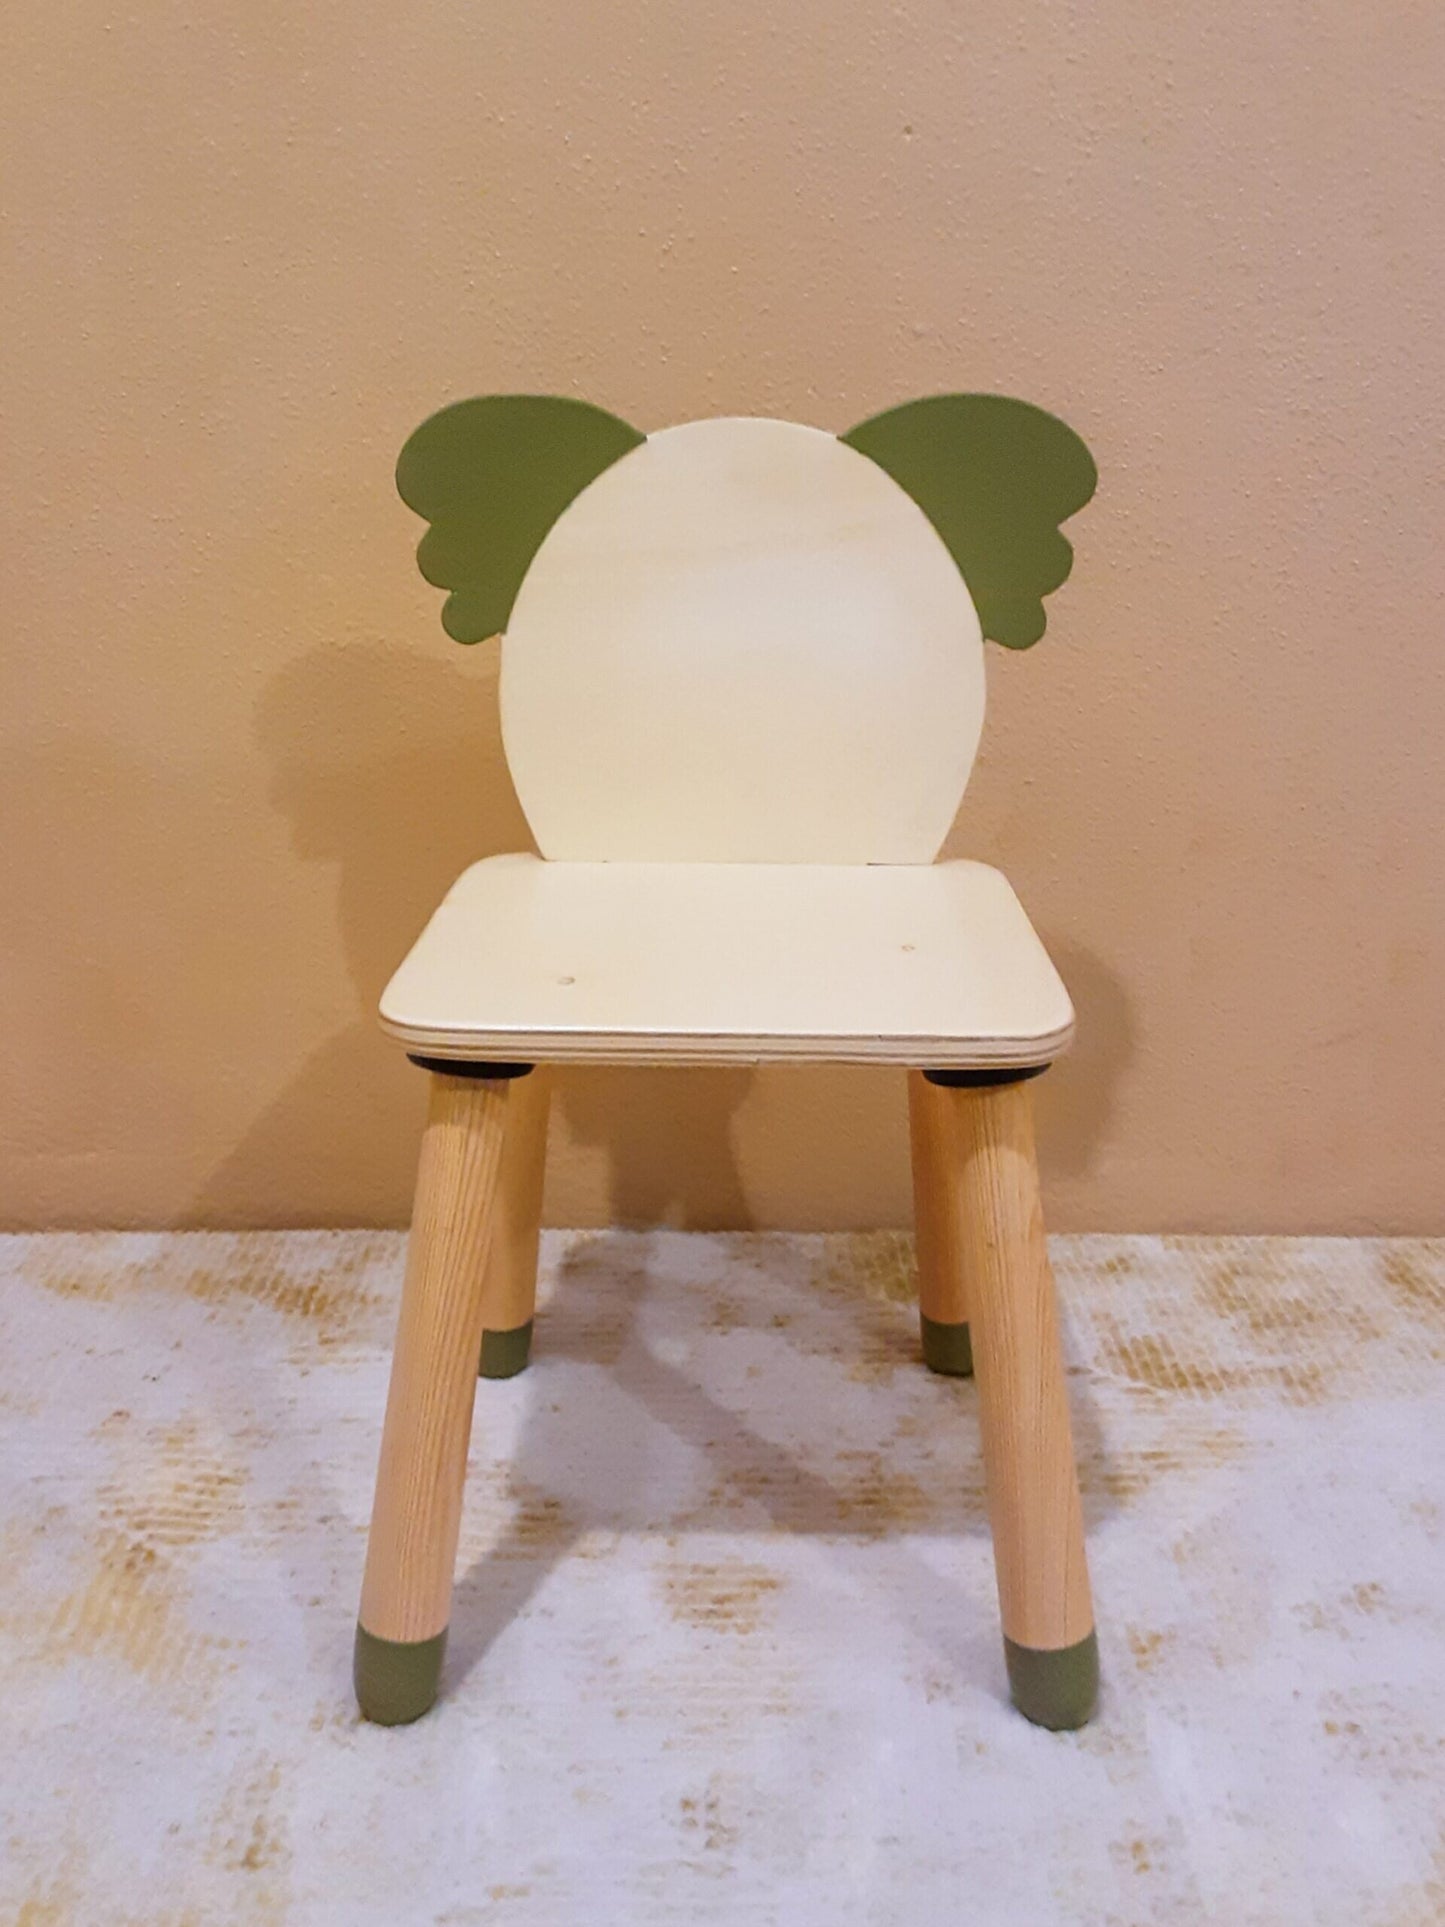 Wood&Joy Wooden Colorful Koala Chair